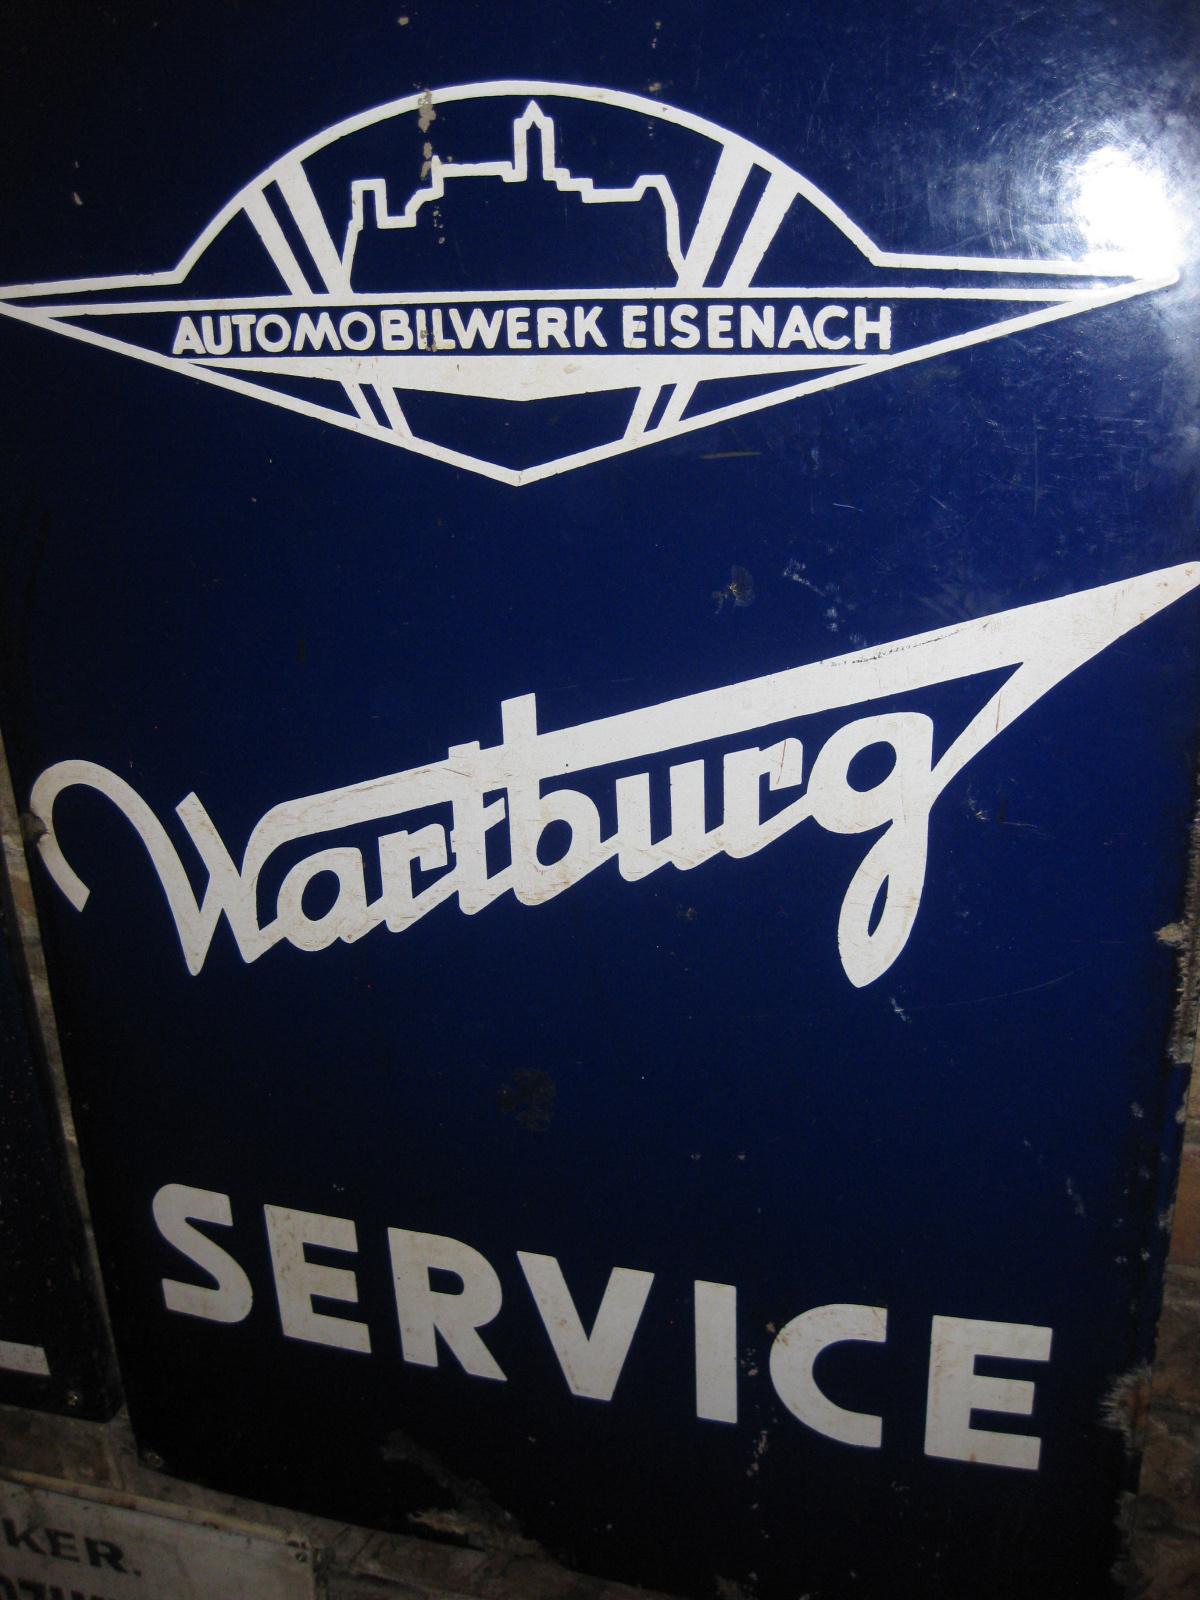 Vartburg service